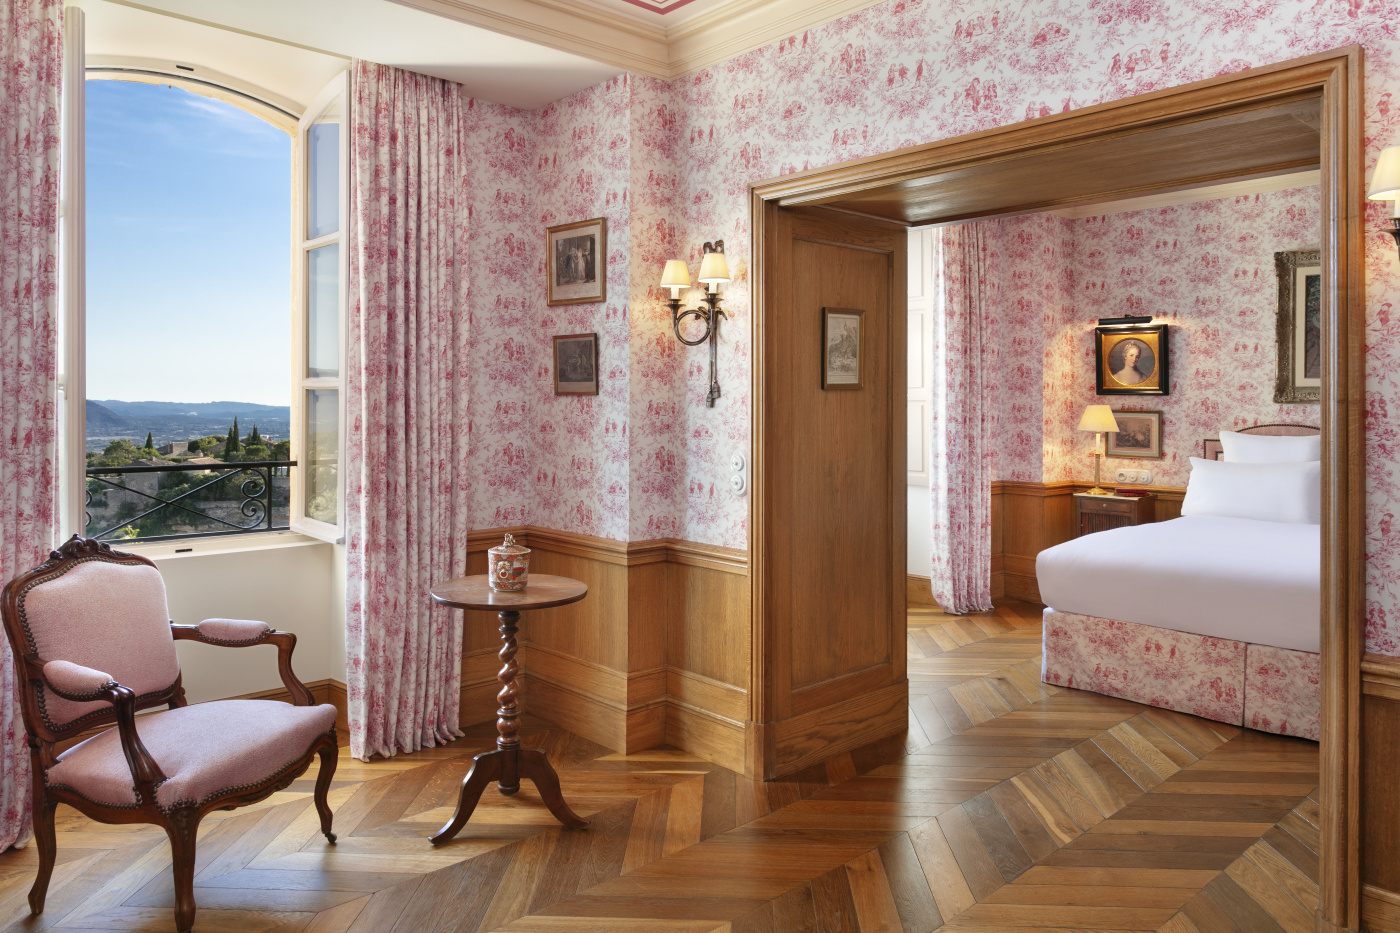 Toile de jouy suite of luxury villa in France for wedding